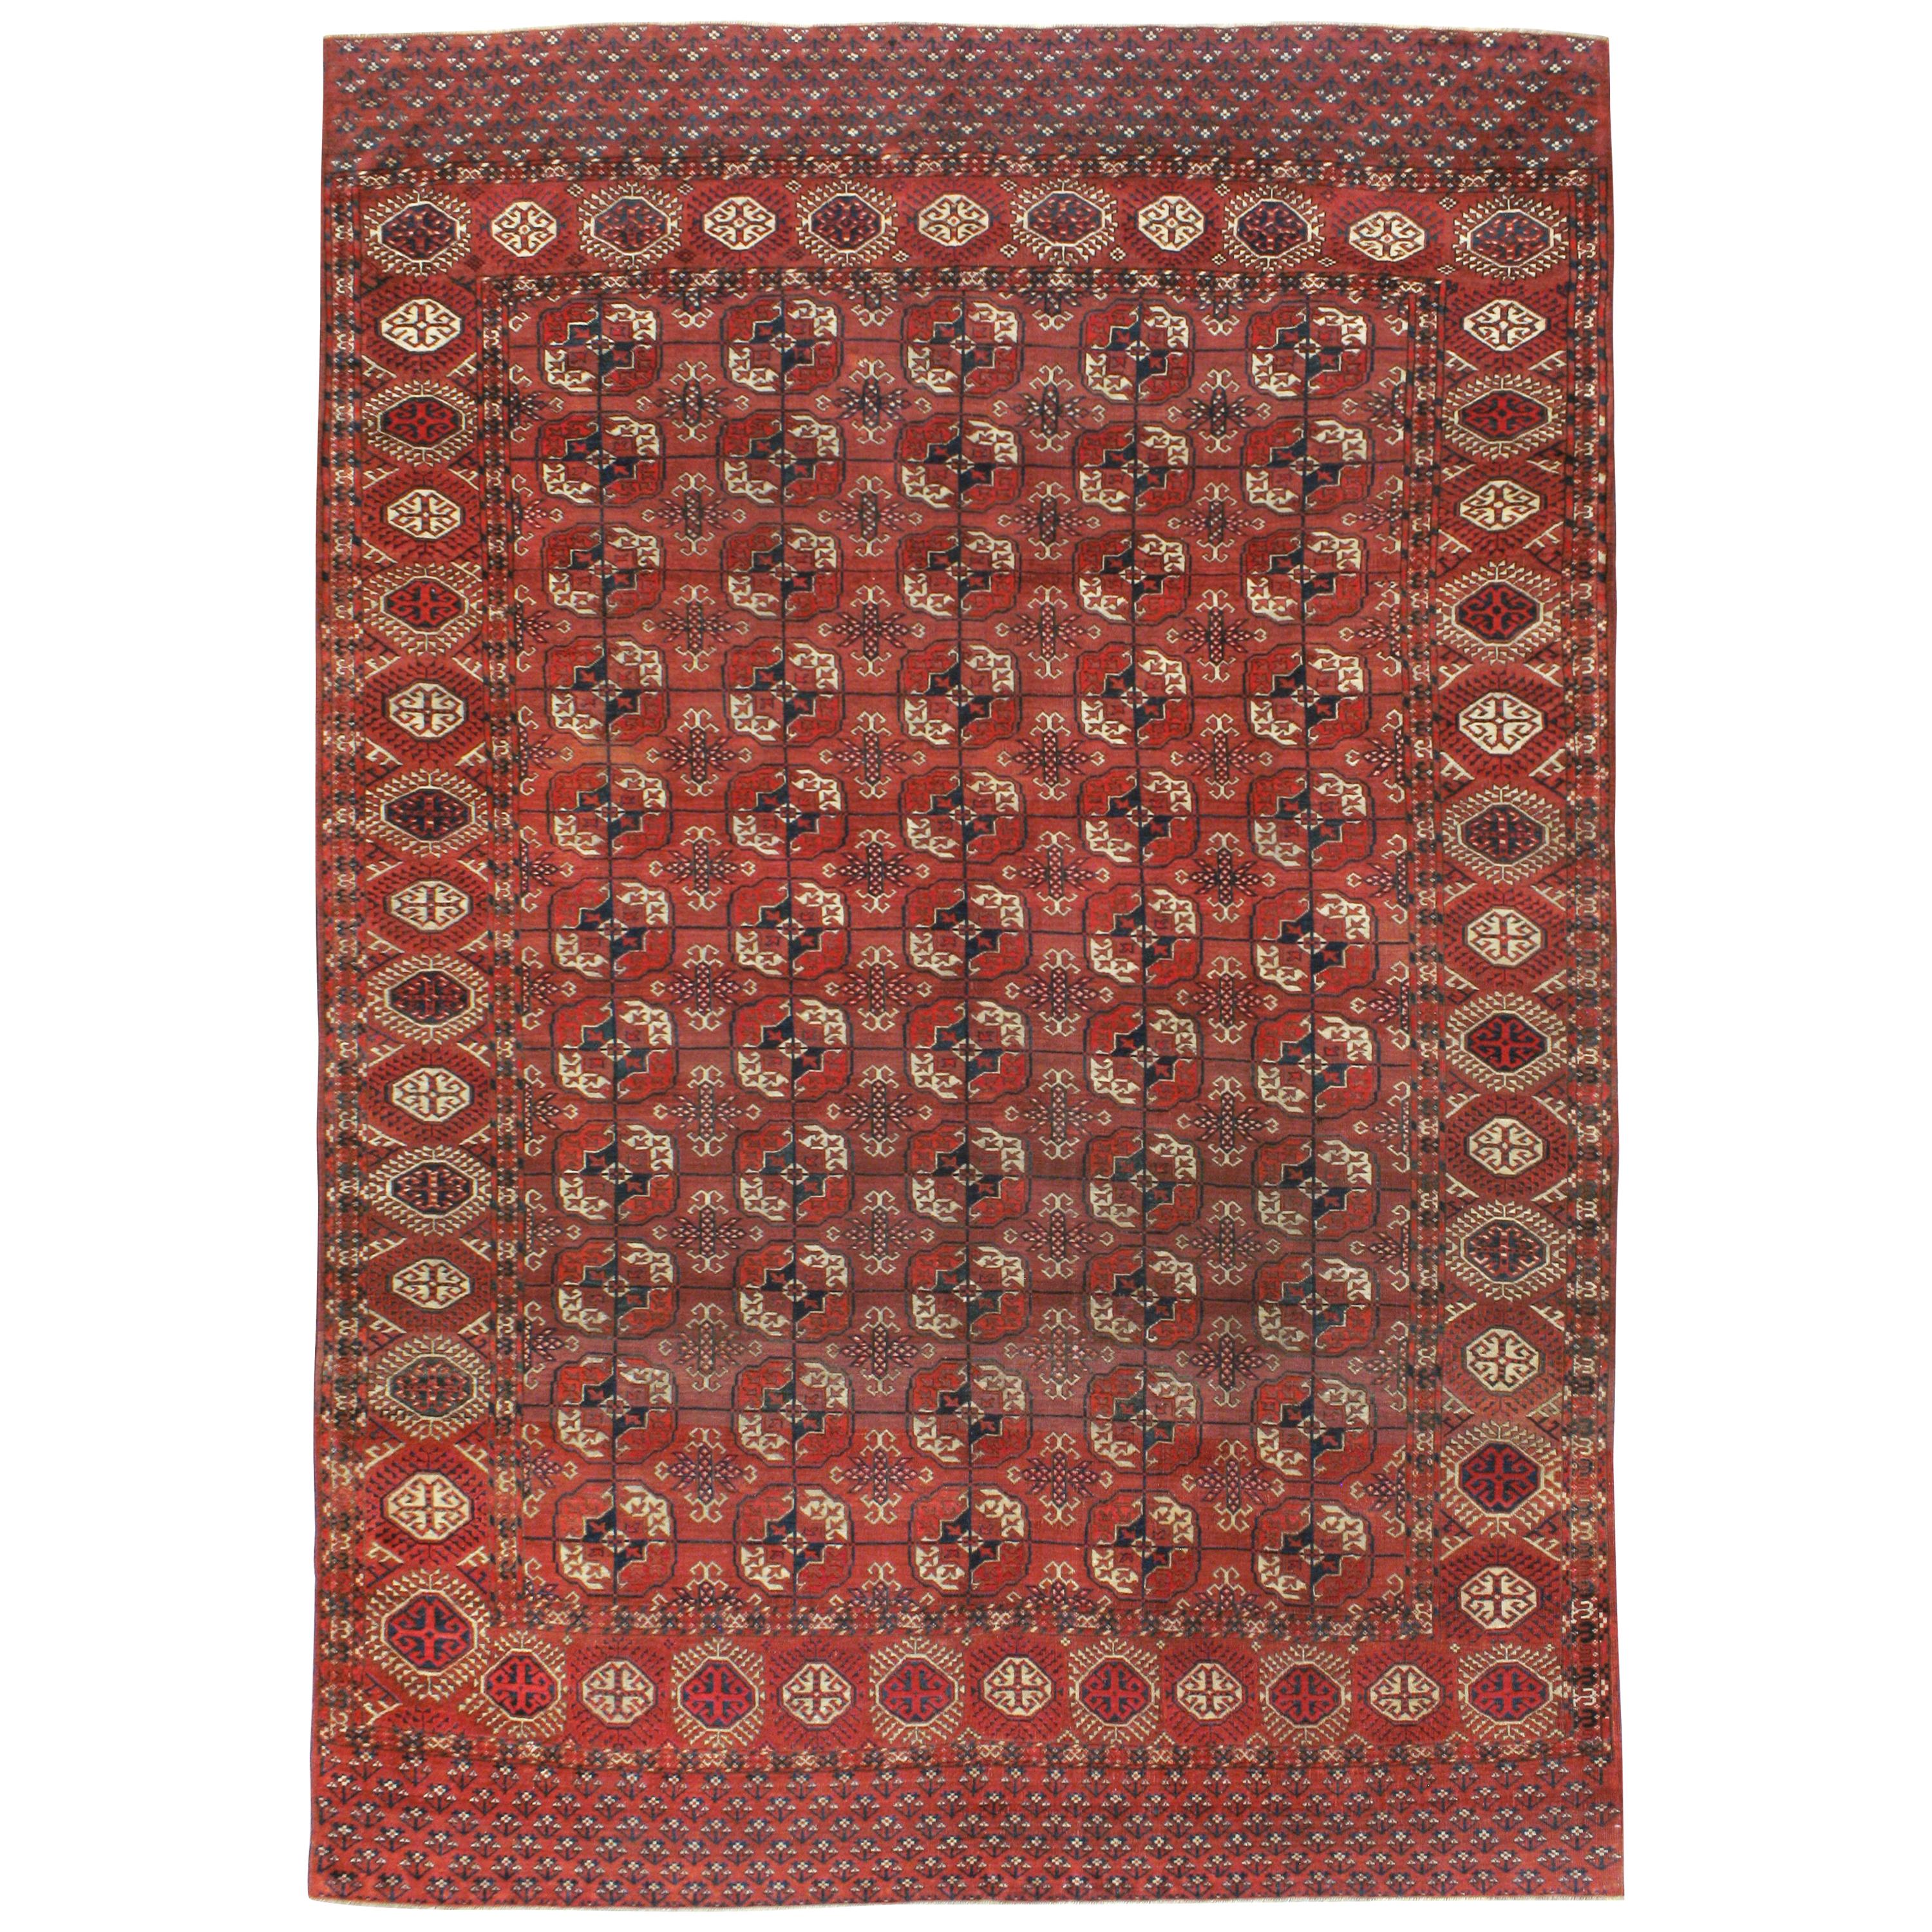 Antique Central Asian Tekke Carpet